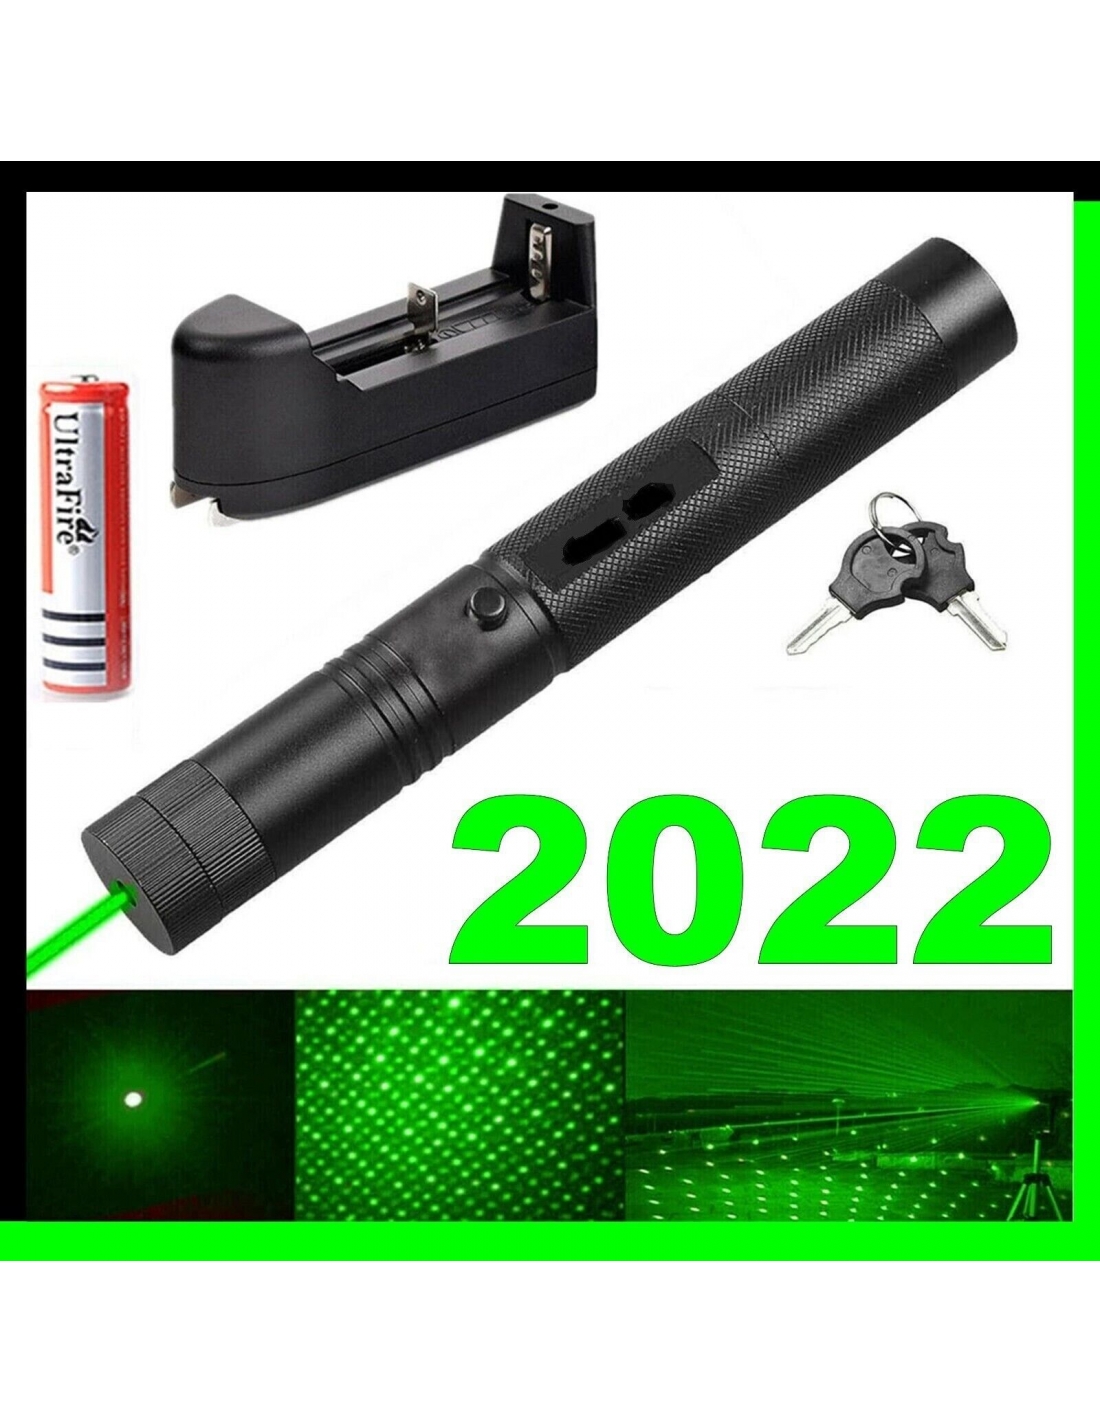 Penna Puntatore Laser Regolabile 532nm Verde 1mw Batteria Luce